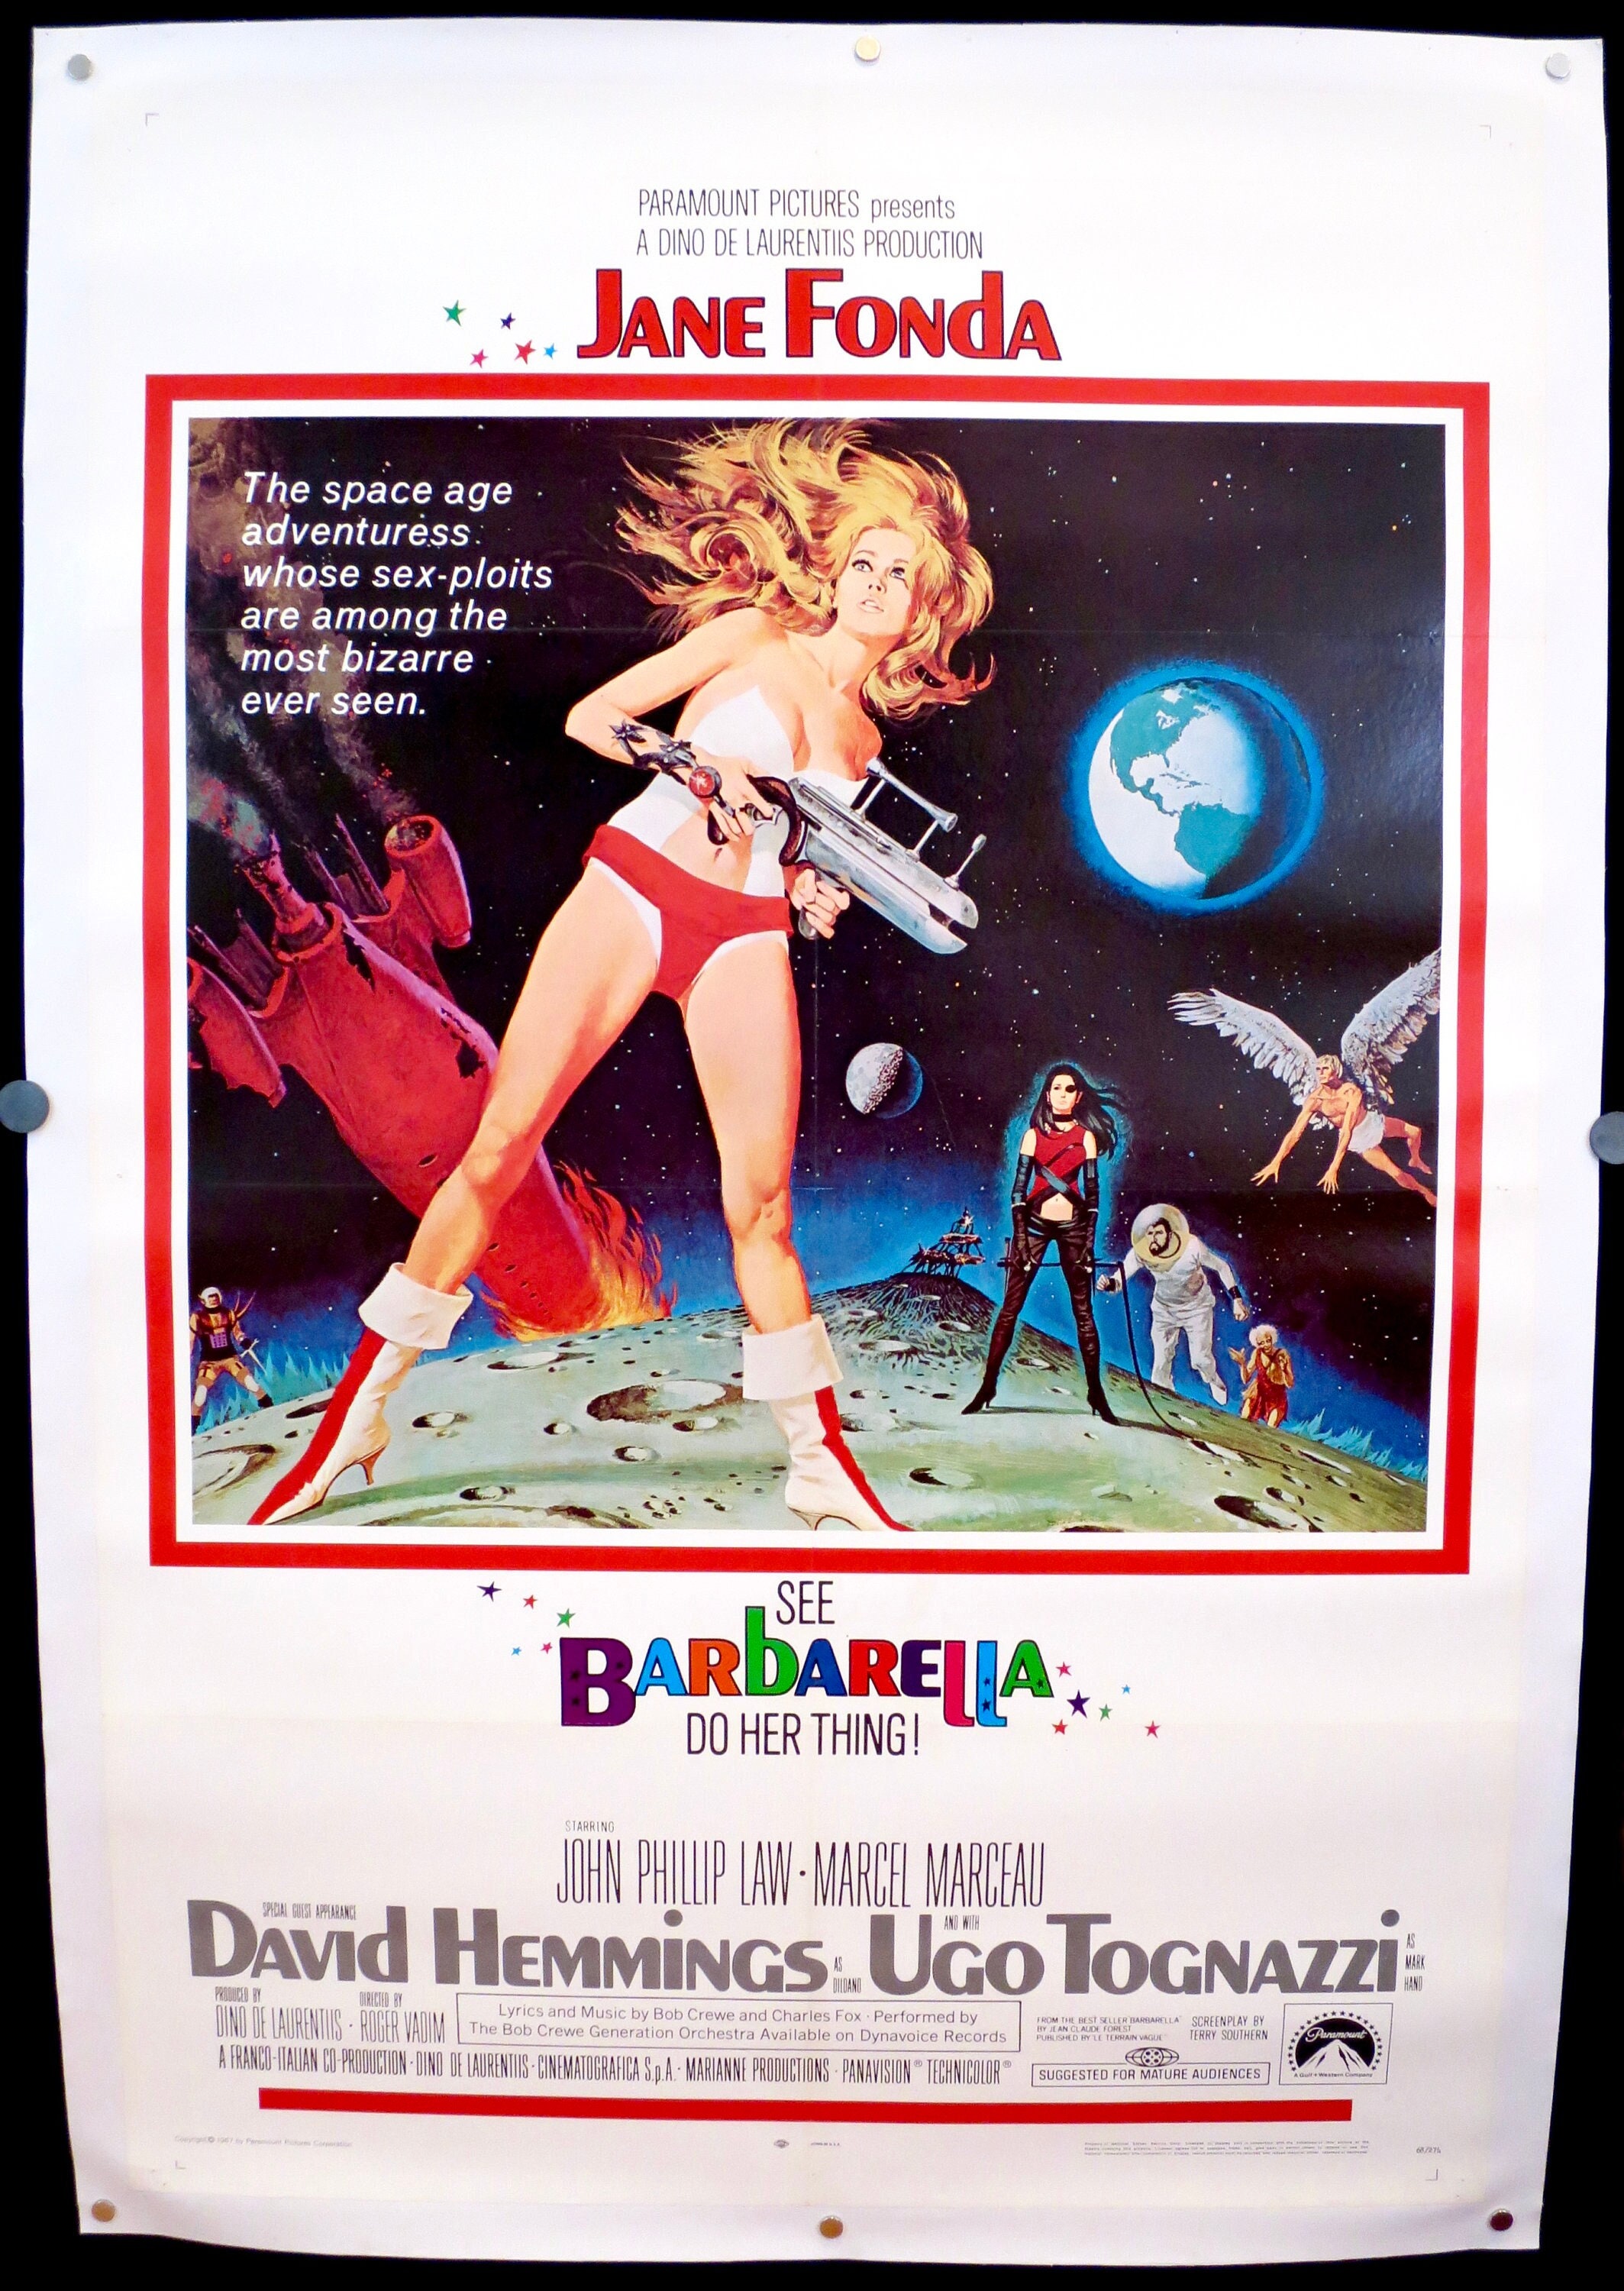 BARBARELLA - Linen Backed Orig 1968 US 1 Sheet - VG Cond - GORGEOUS Robert McGinnis Sci-Fi Fantasy Art - Jane Fonda & John Phillip Law!